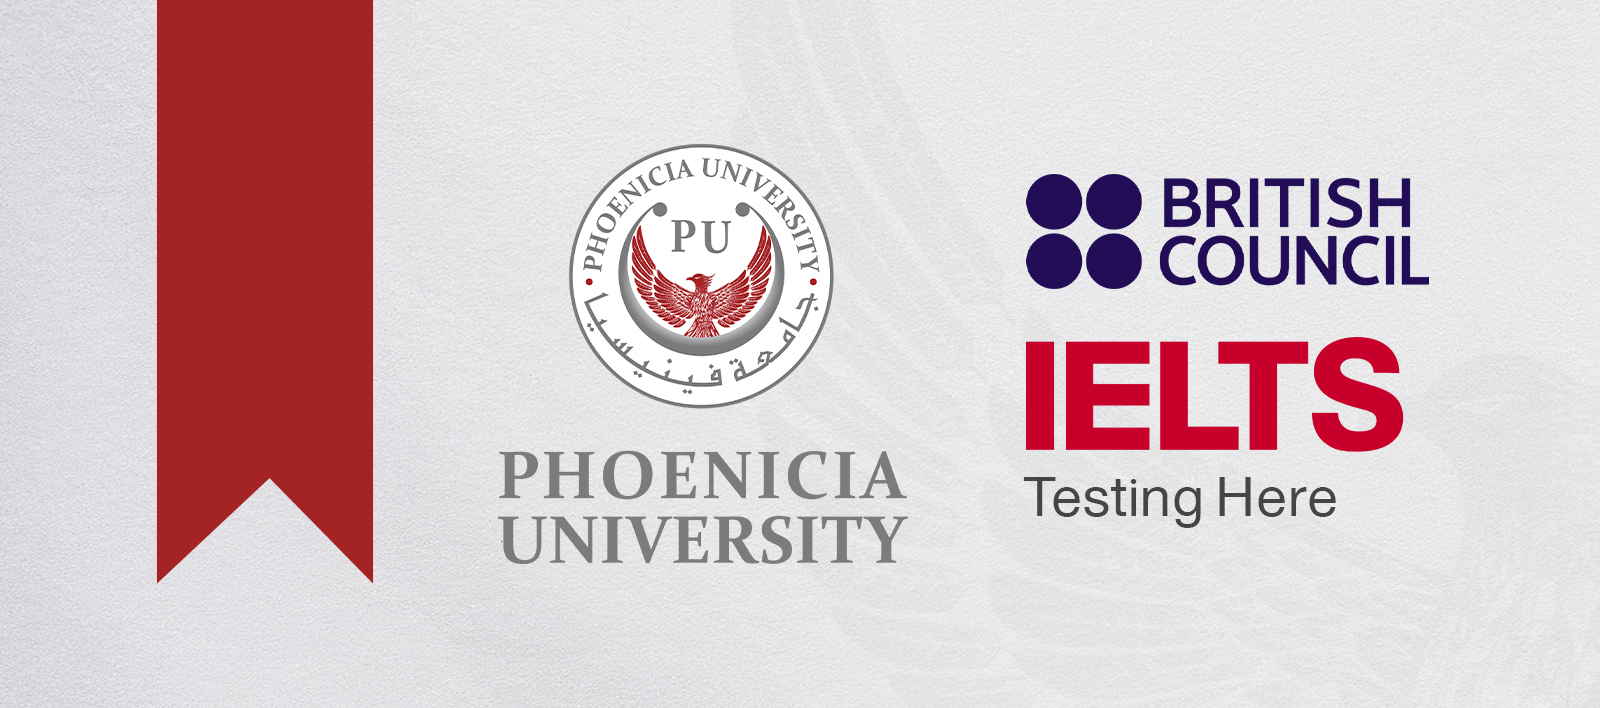 PU-British Council Partnership for IELTS Examination Programme